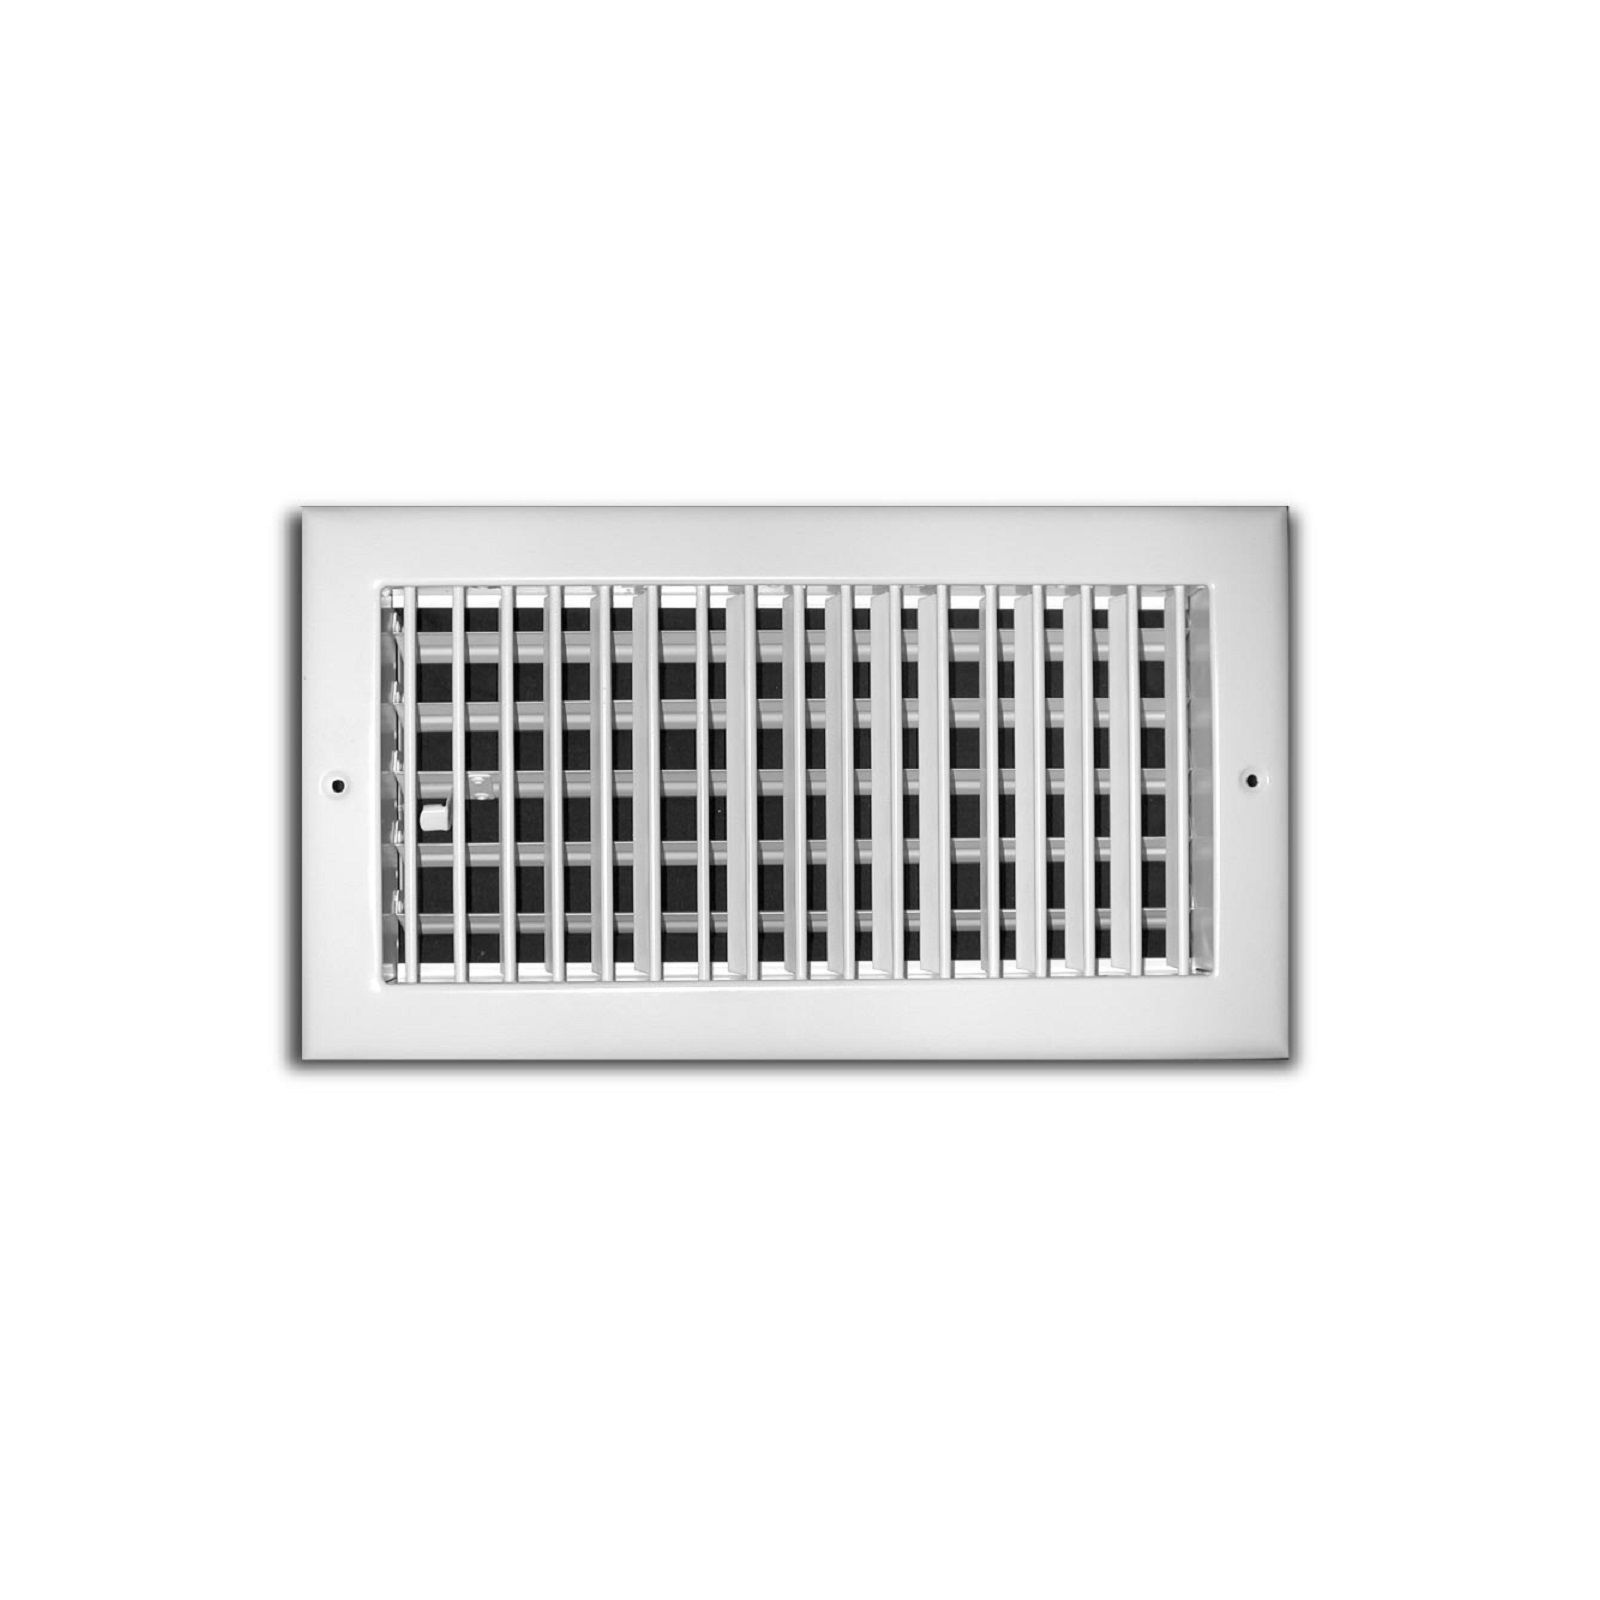 TRUaire 210VM 16X04 - Steel Adjustable 1-Way Wall/Ceiling Register With Multi Shutter Damper, White, 16" X 04"